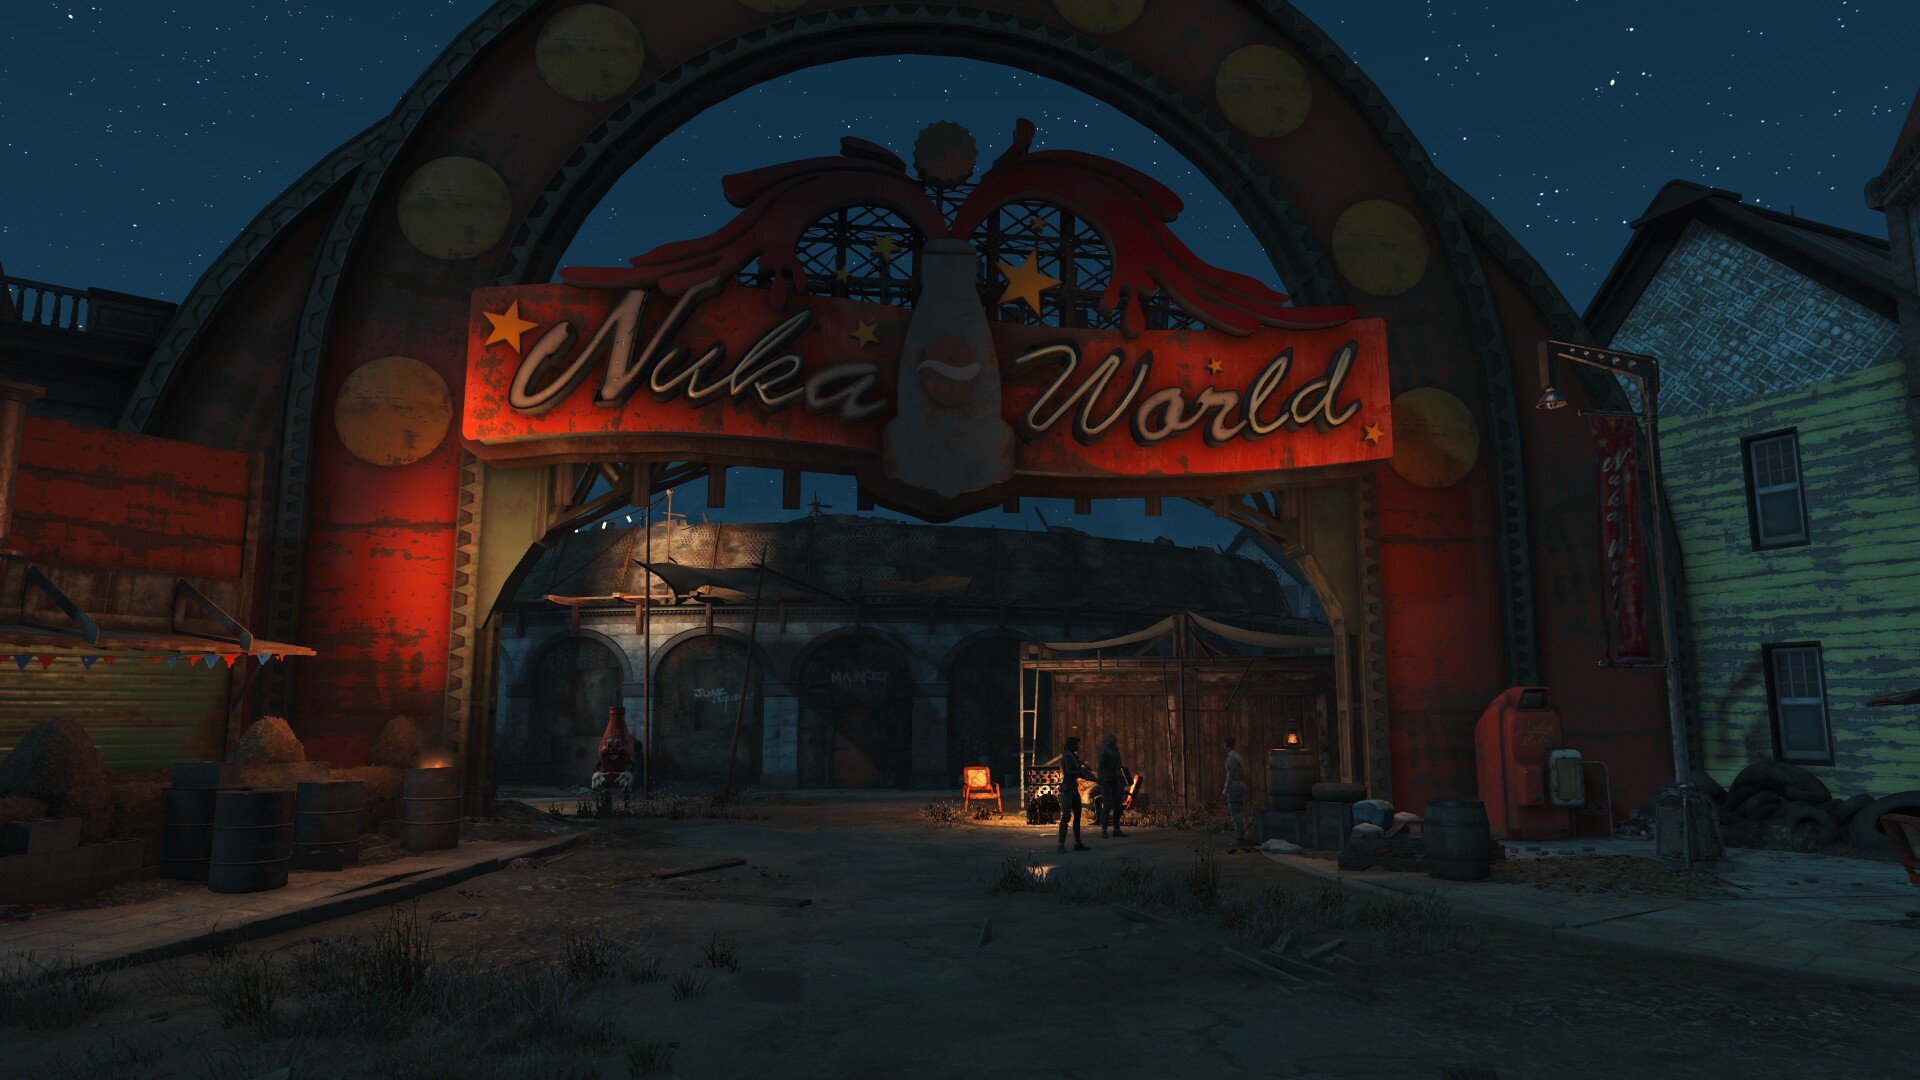 Fallout 4 nuka world задания банд фото 70